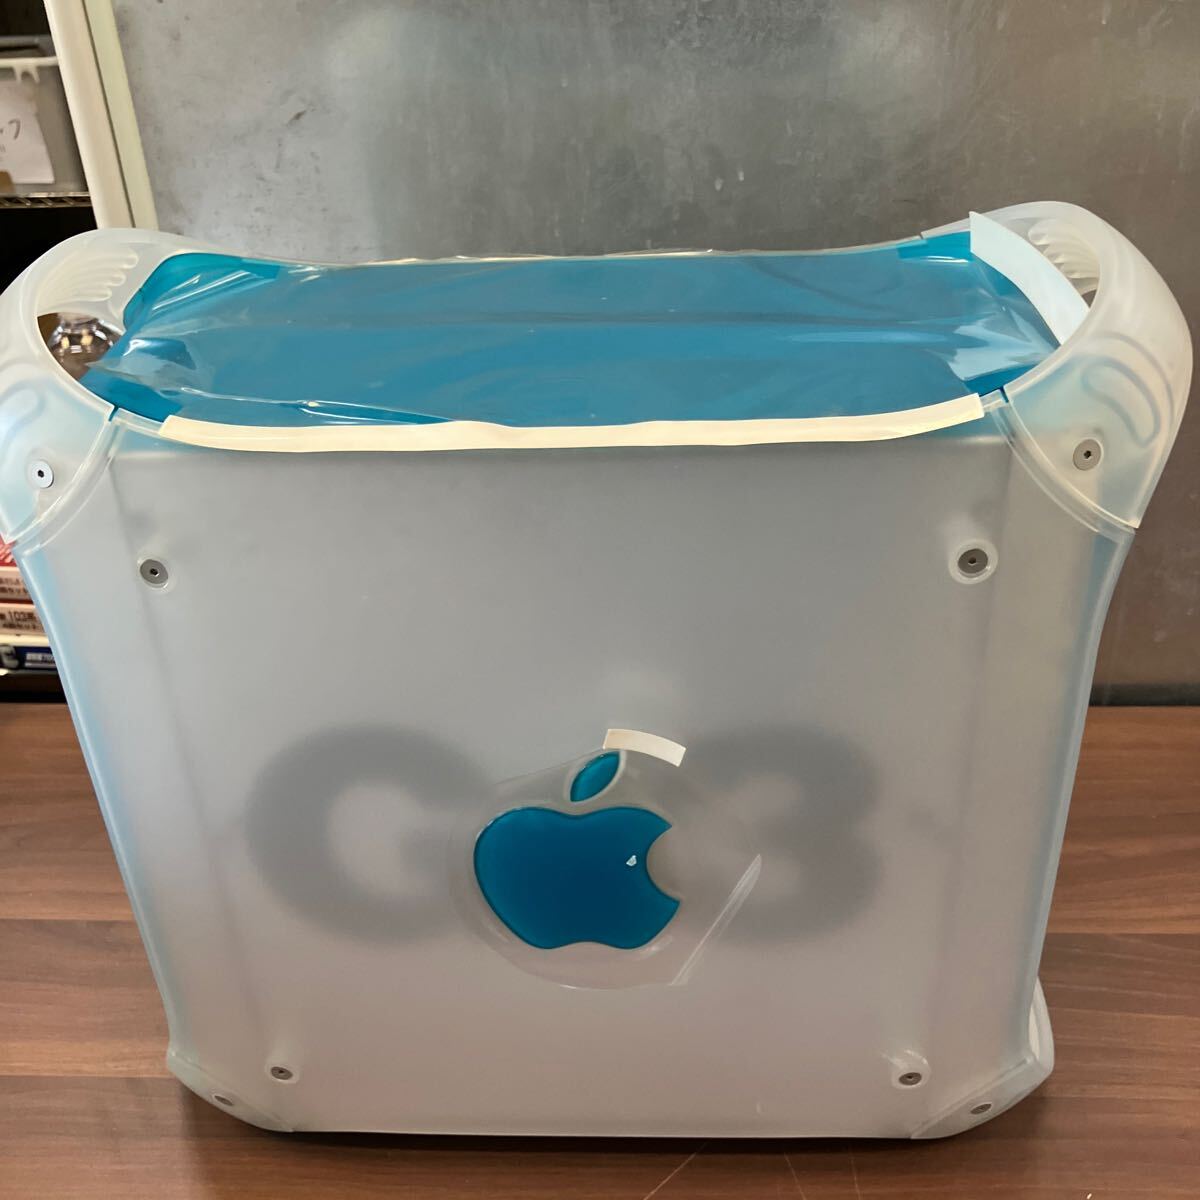 Apple Power Macintosh G3 セット 箱あり PowerMac Apple パワーマック G3 Mac アップル キーボード マウス Keyboard 家庭用家電 _画像1